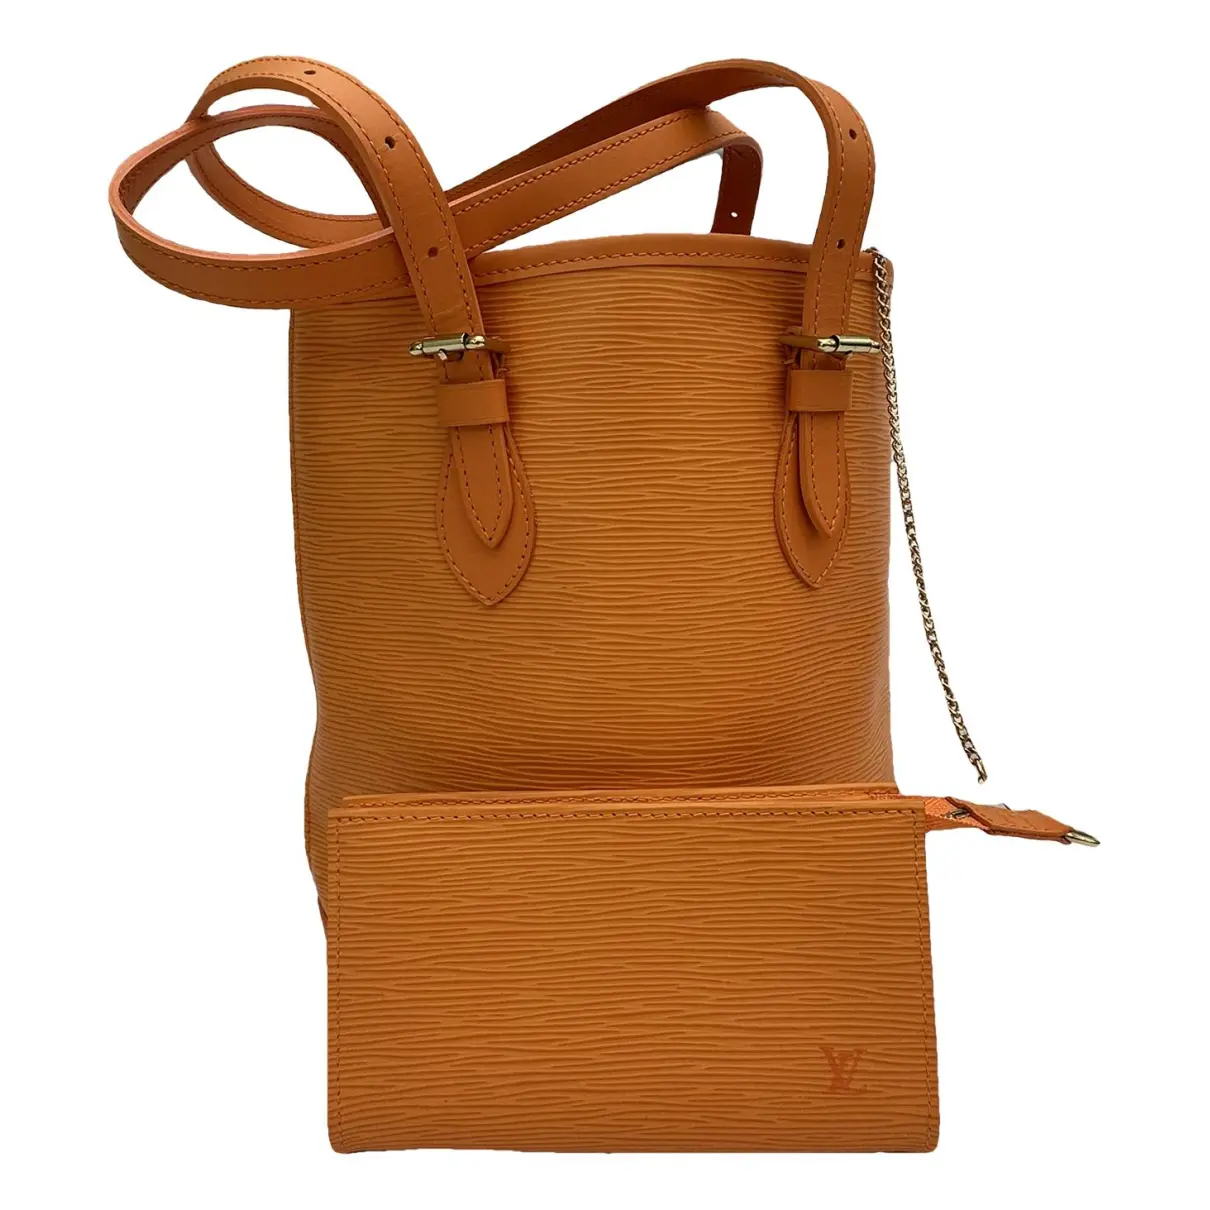 Bucket leather handbag